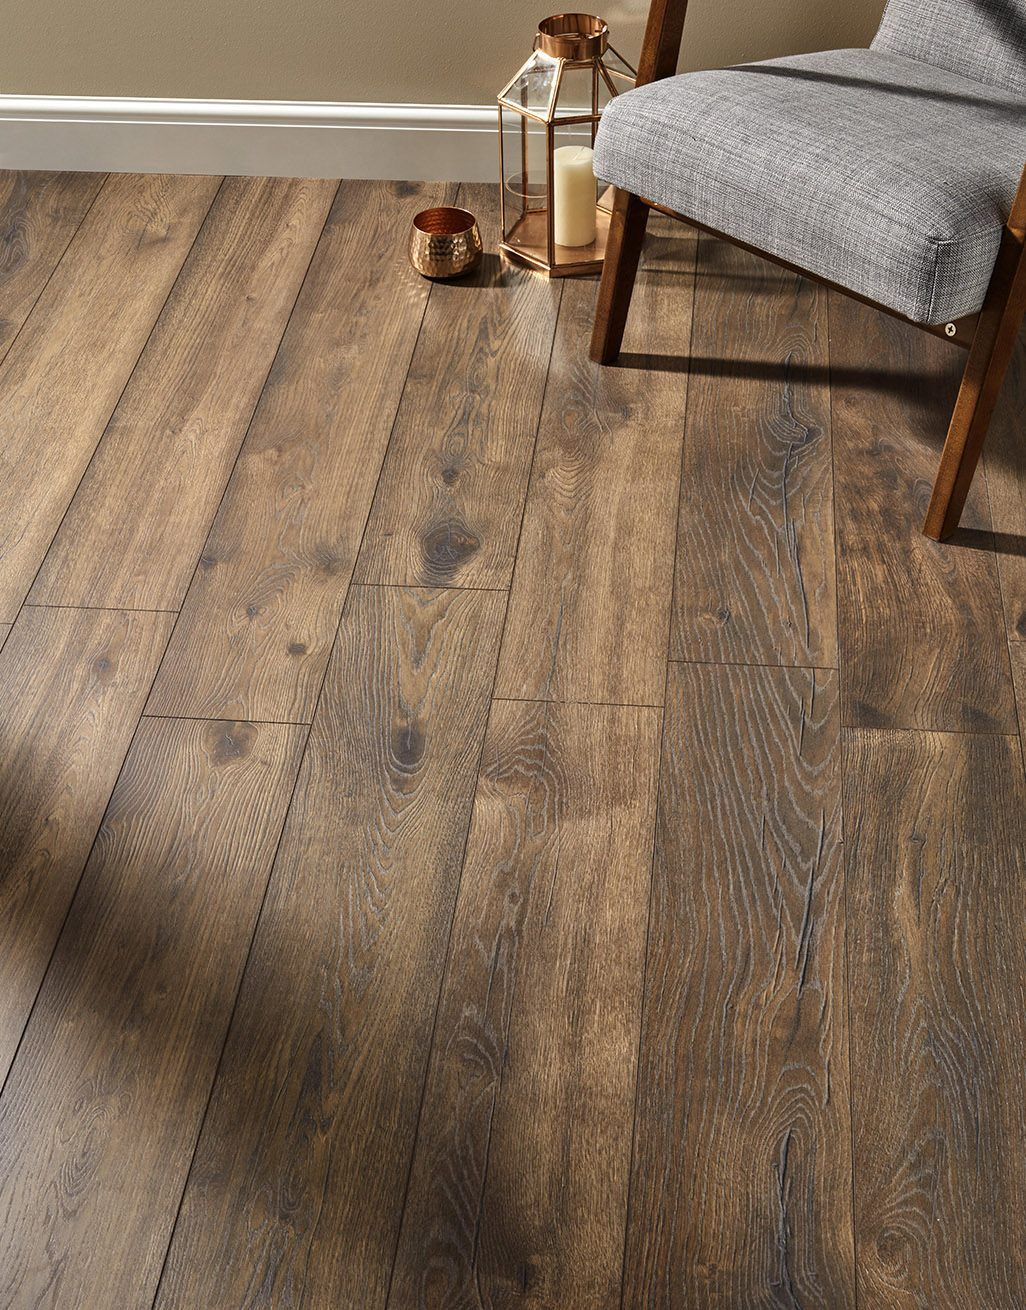 Villa - Peterson Oak Laminate Flooring | Flooring Superstore